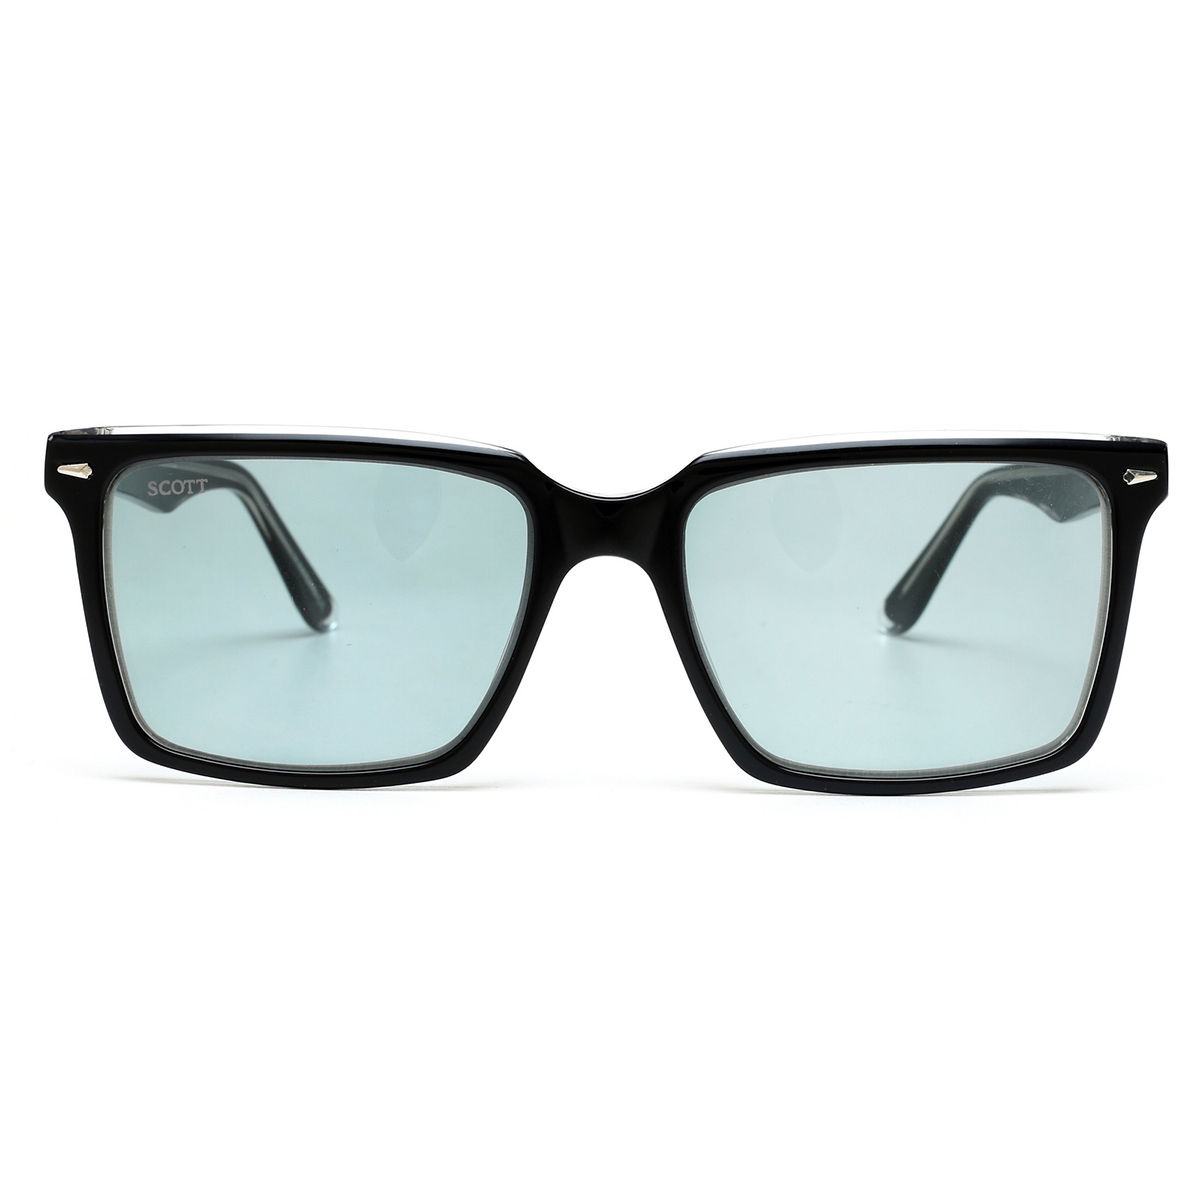 Buy Blue lens color Sunglasses | SmartBuyGlasses India